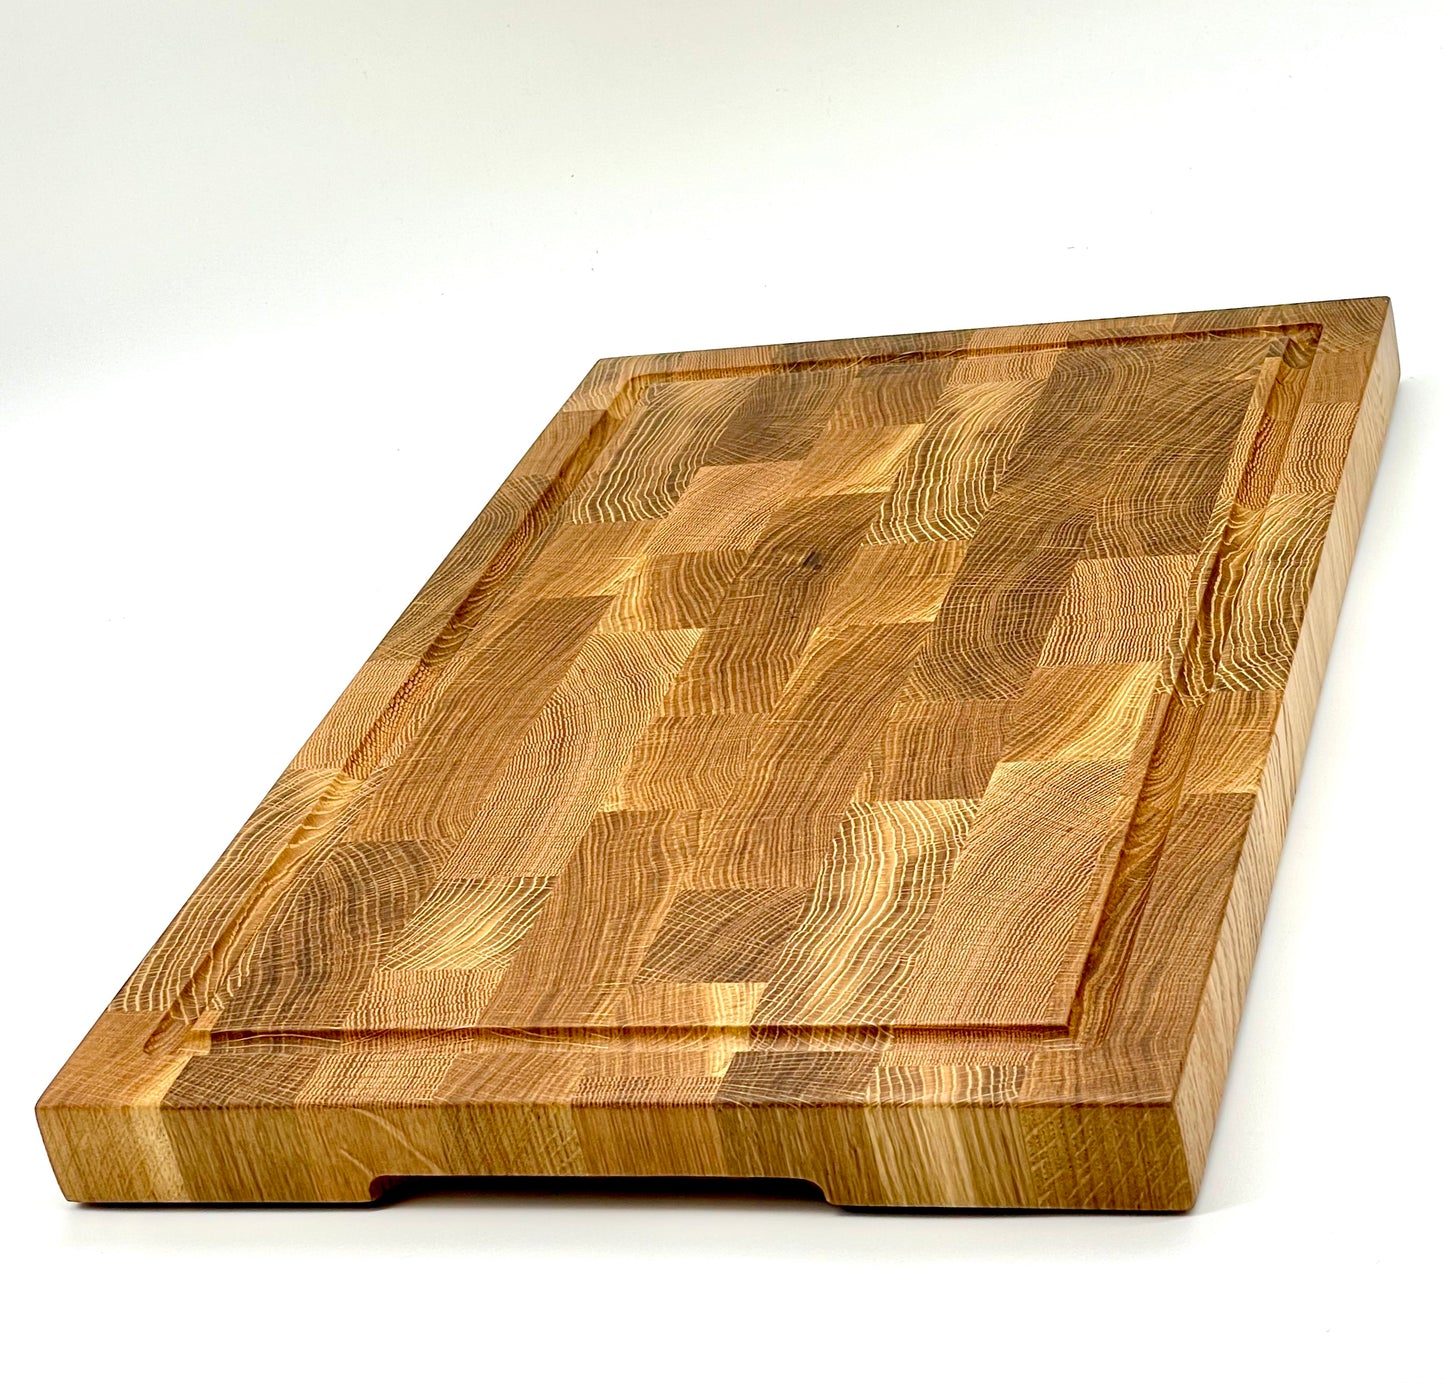 Large end grain white oak cutting board